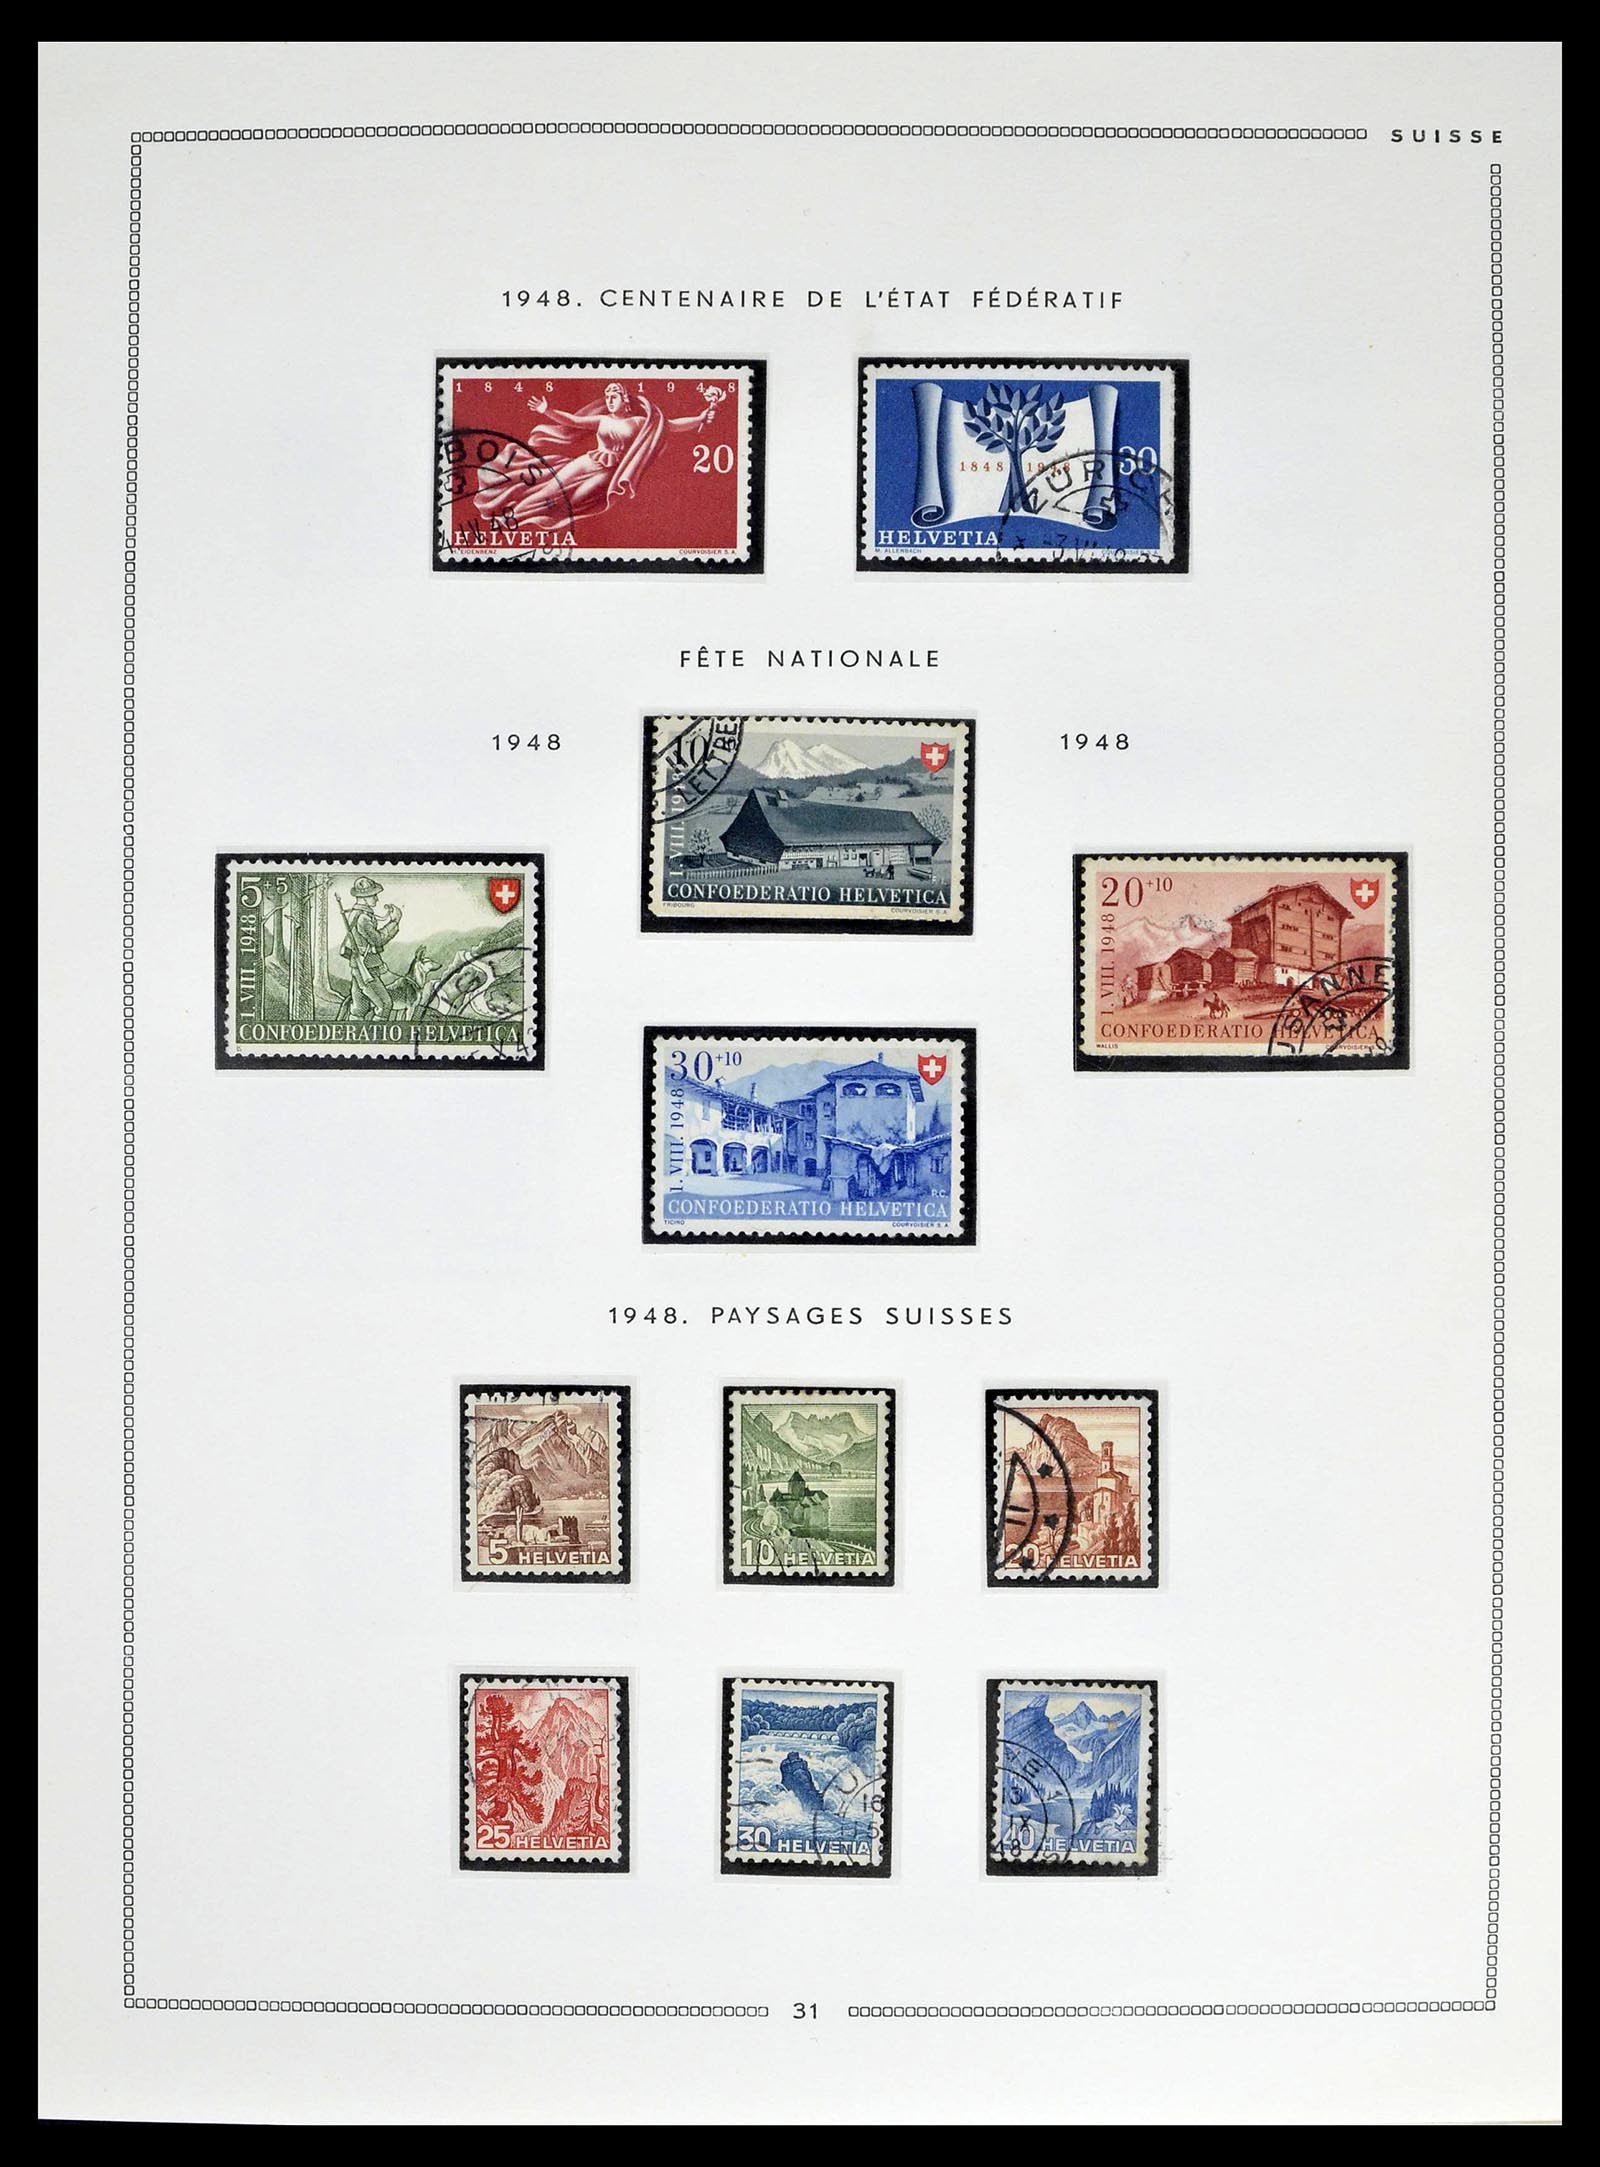 39094 0029 - Stamp collection 39094 Switzerland 1850-2005.